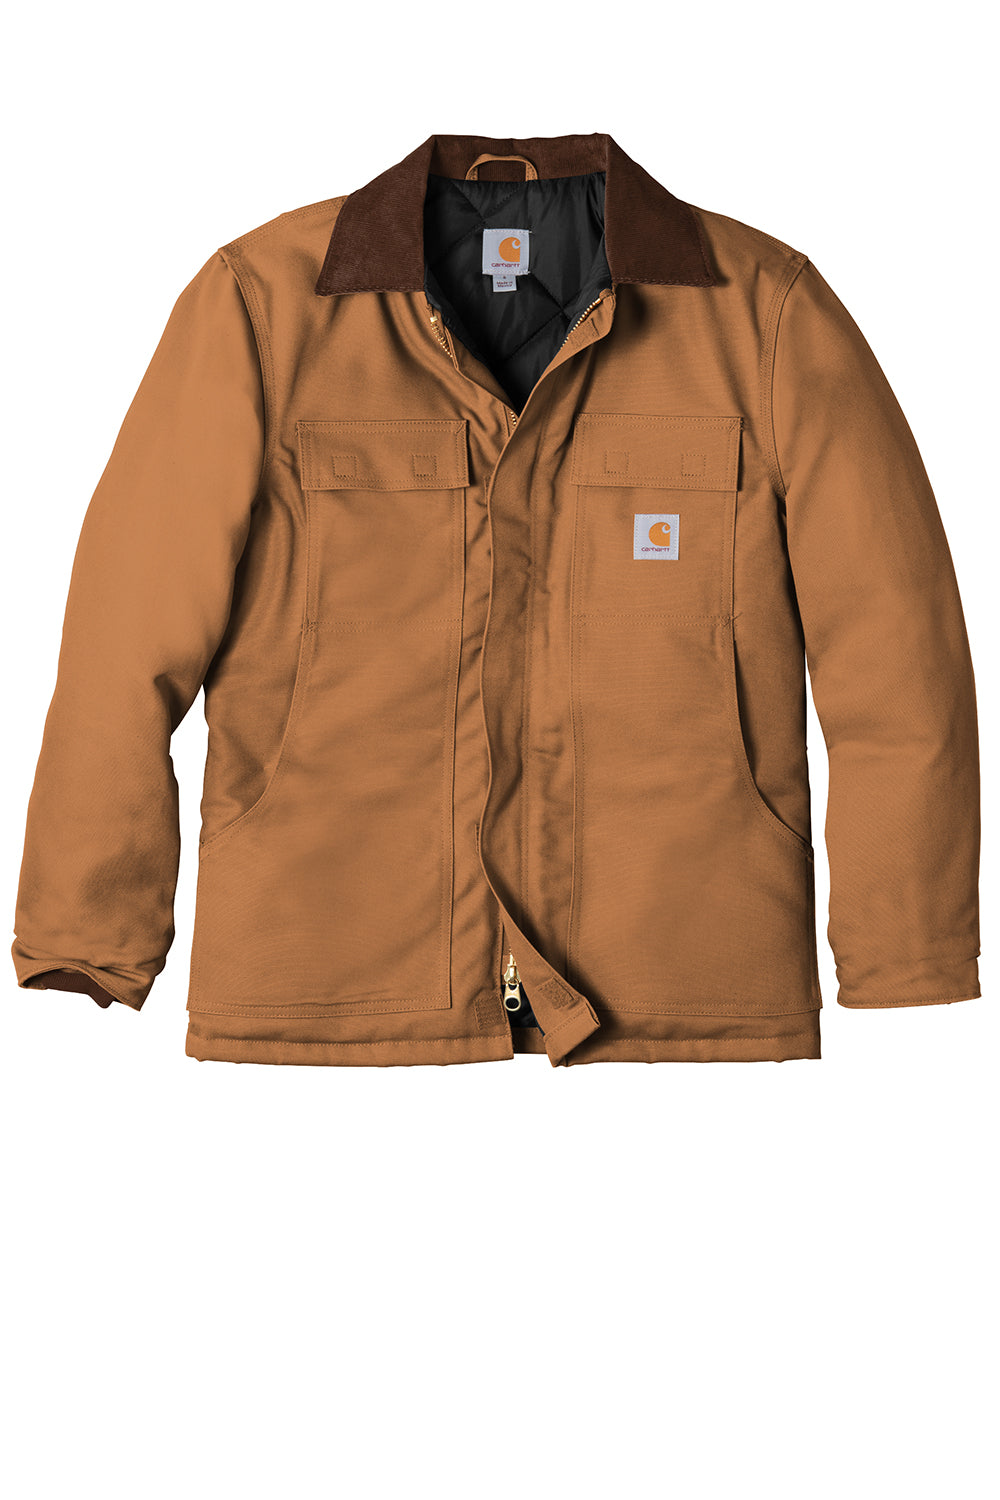 Carhartt CTC003/CTTC003 Mens Wind & Water Resistant Duck Cloth Full Zip Jacket Carhartt Brown Flat Front